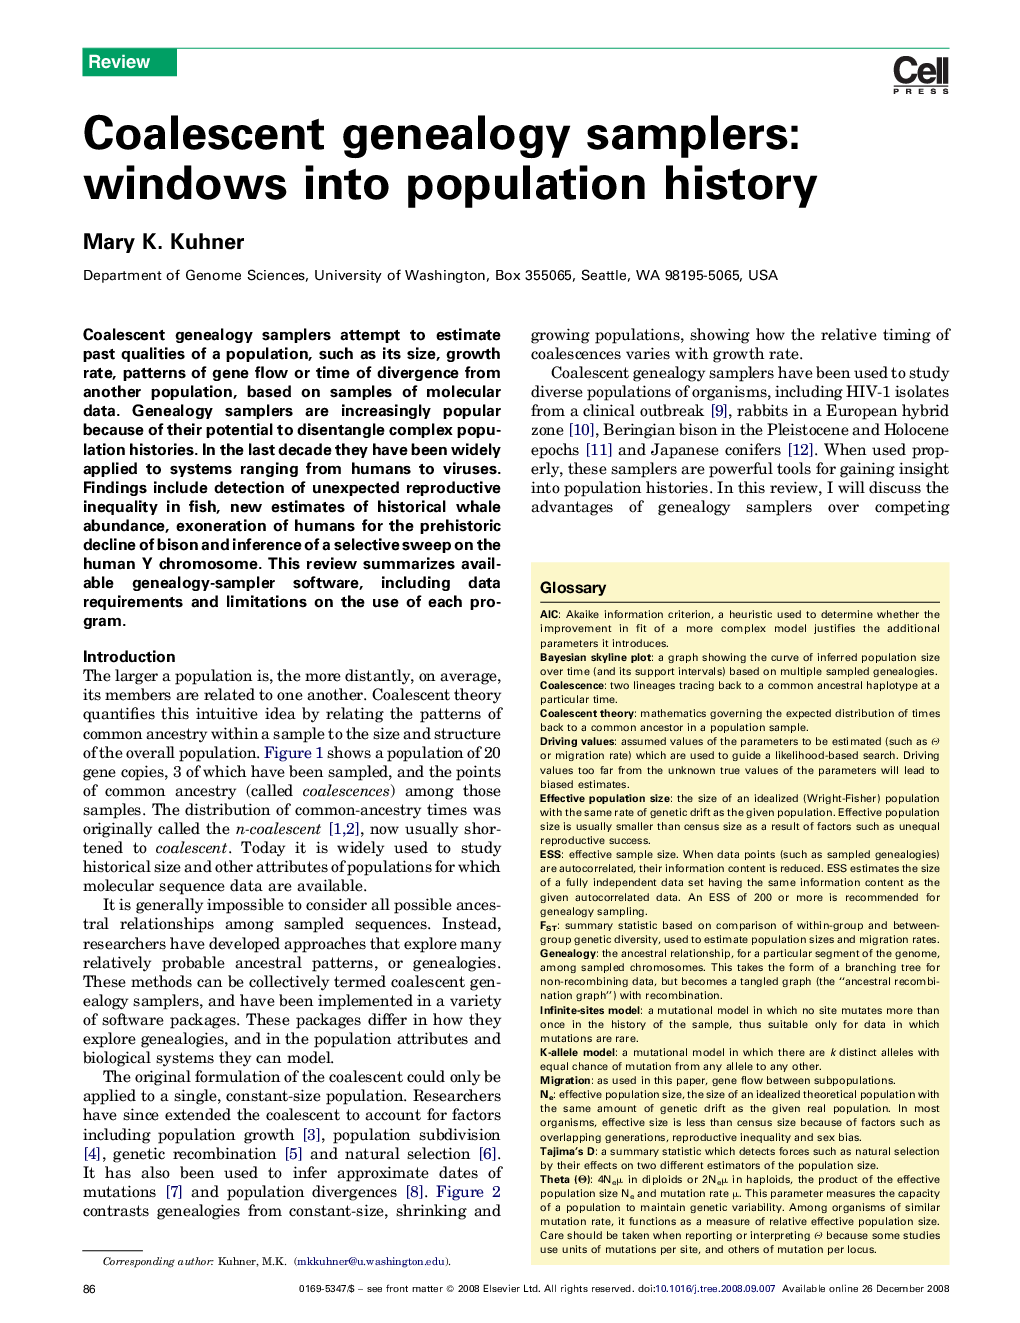 Coalescent genealogy samplers: windows into population history